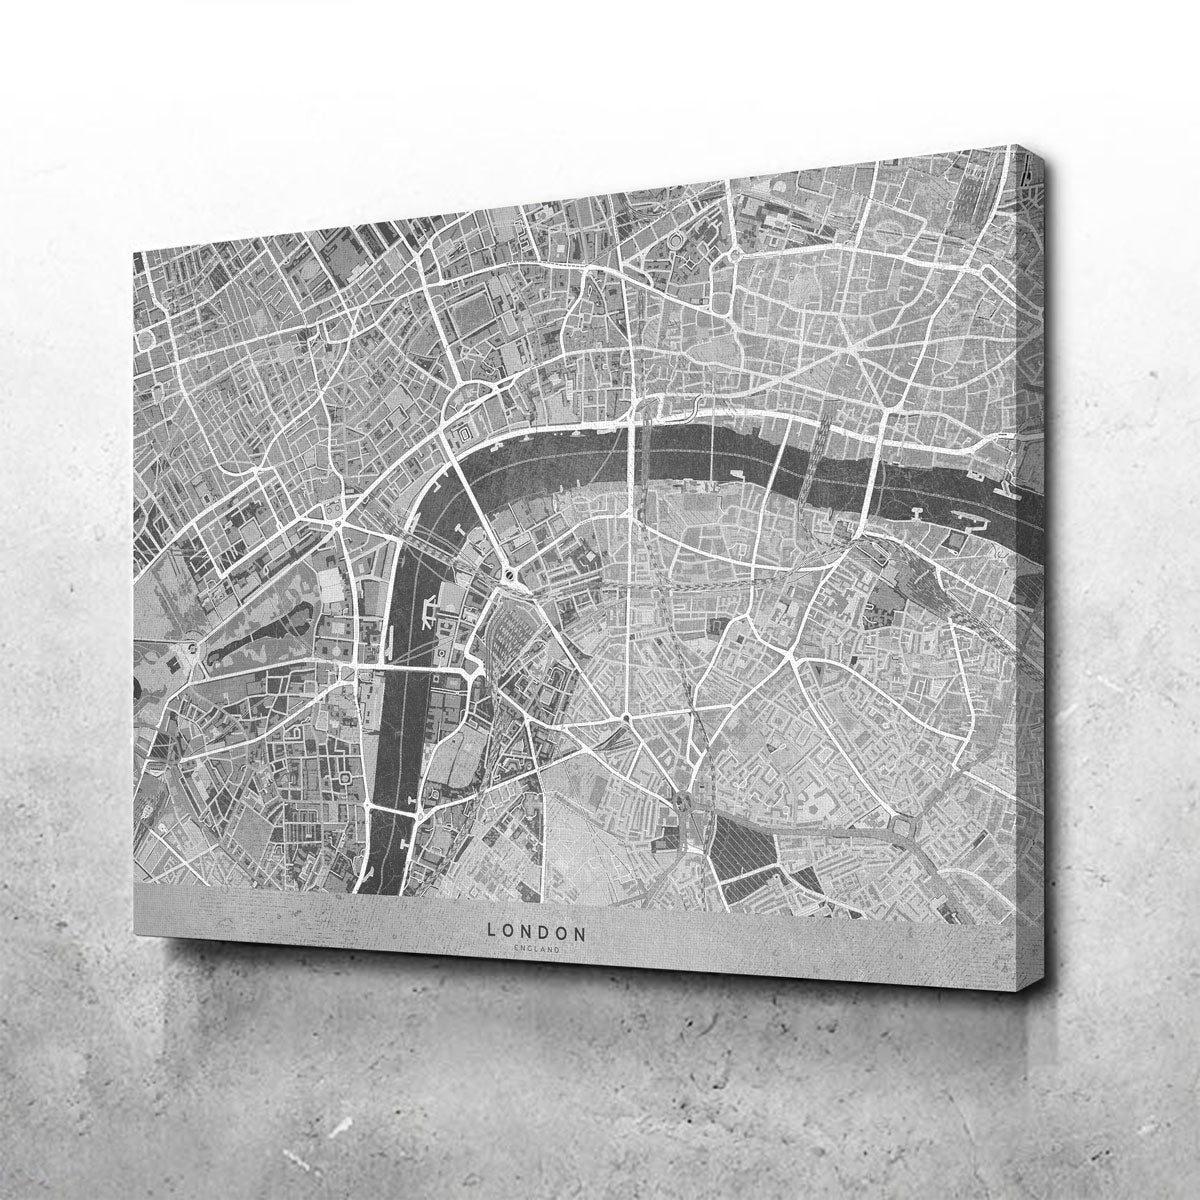 London Map 4